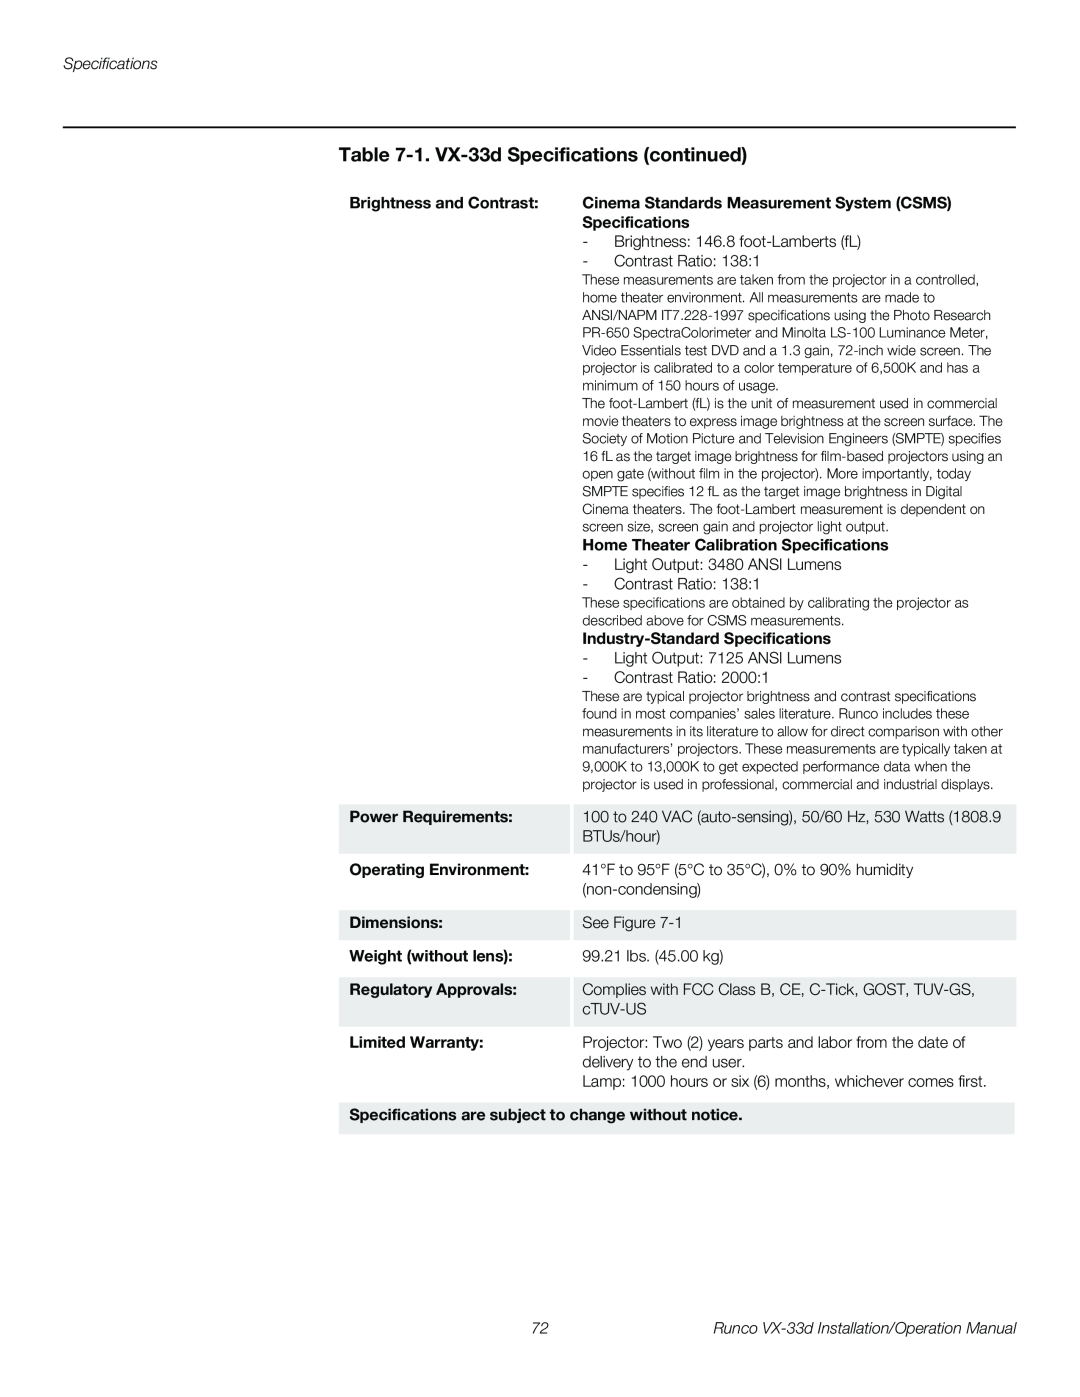 Runco VX-33D operation manual 1. VX-33d Specifications continued 